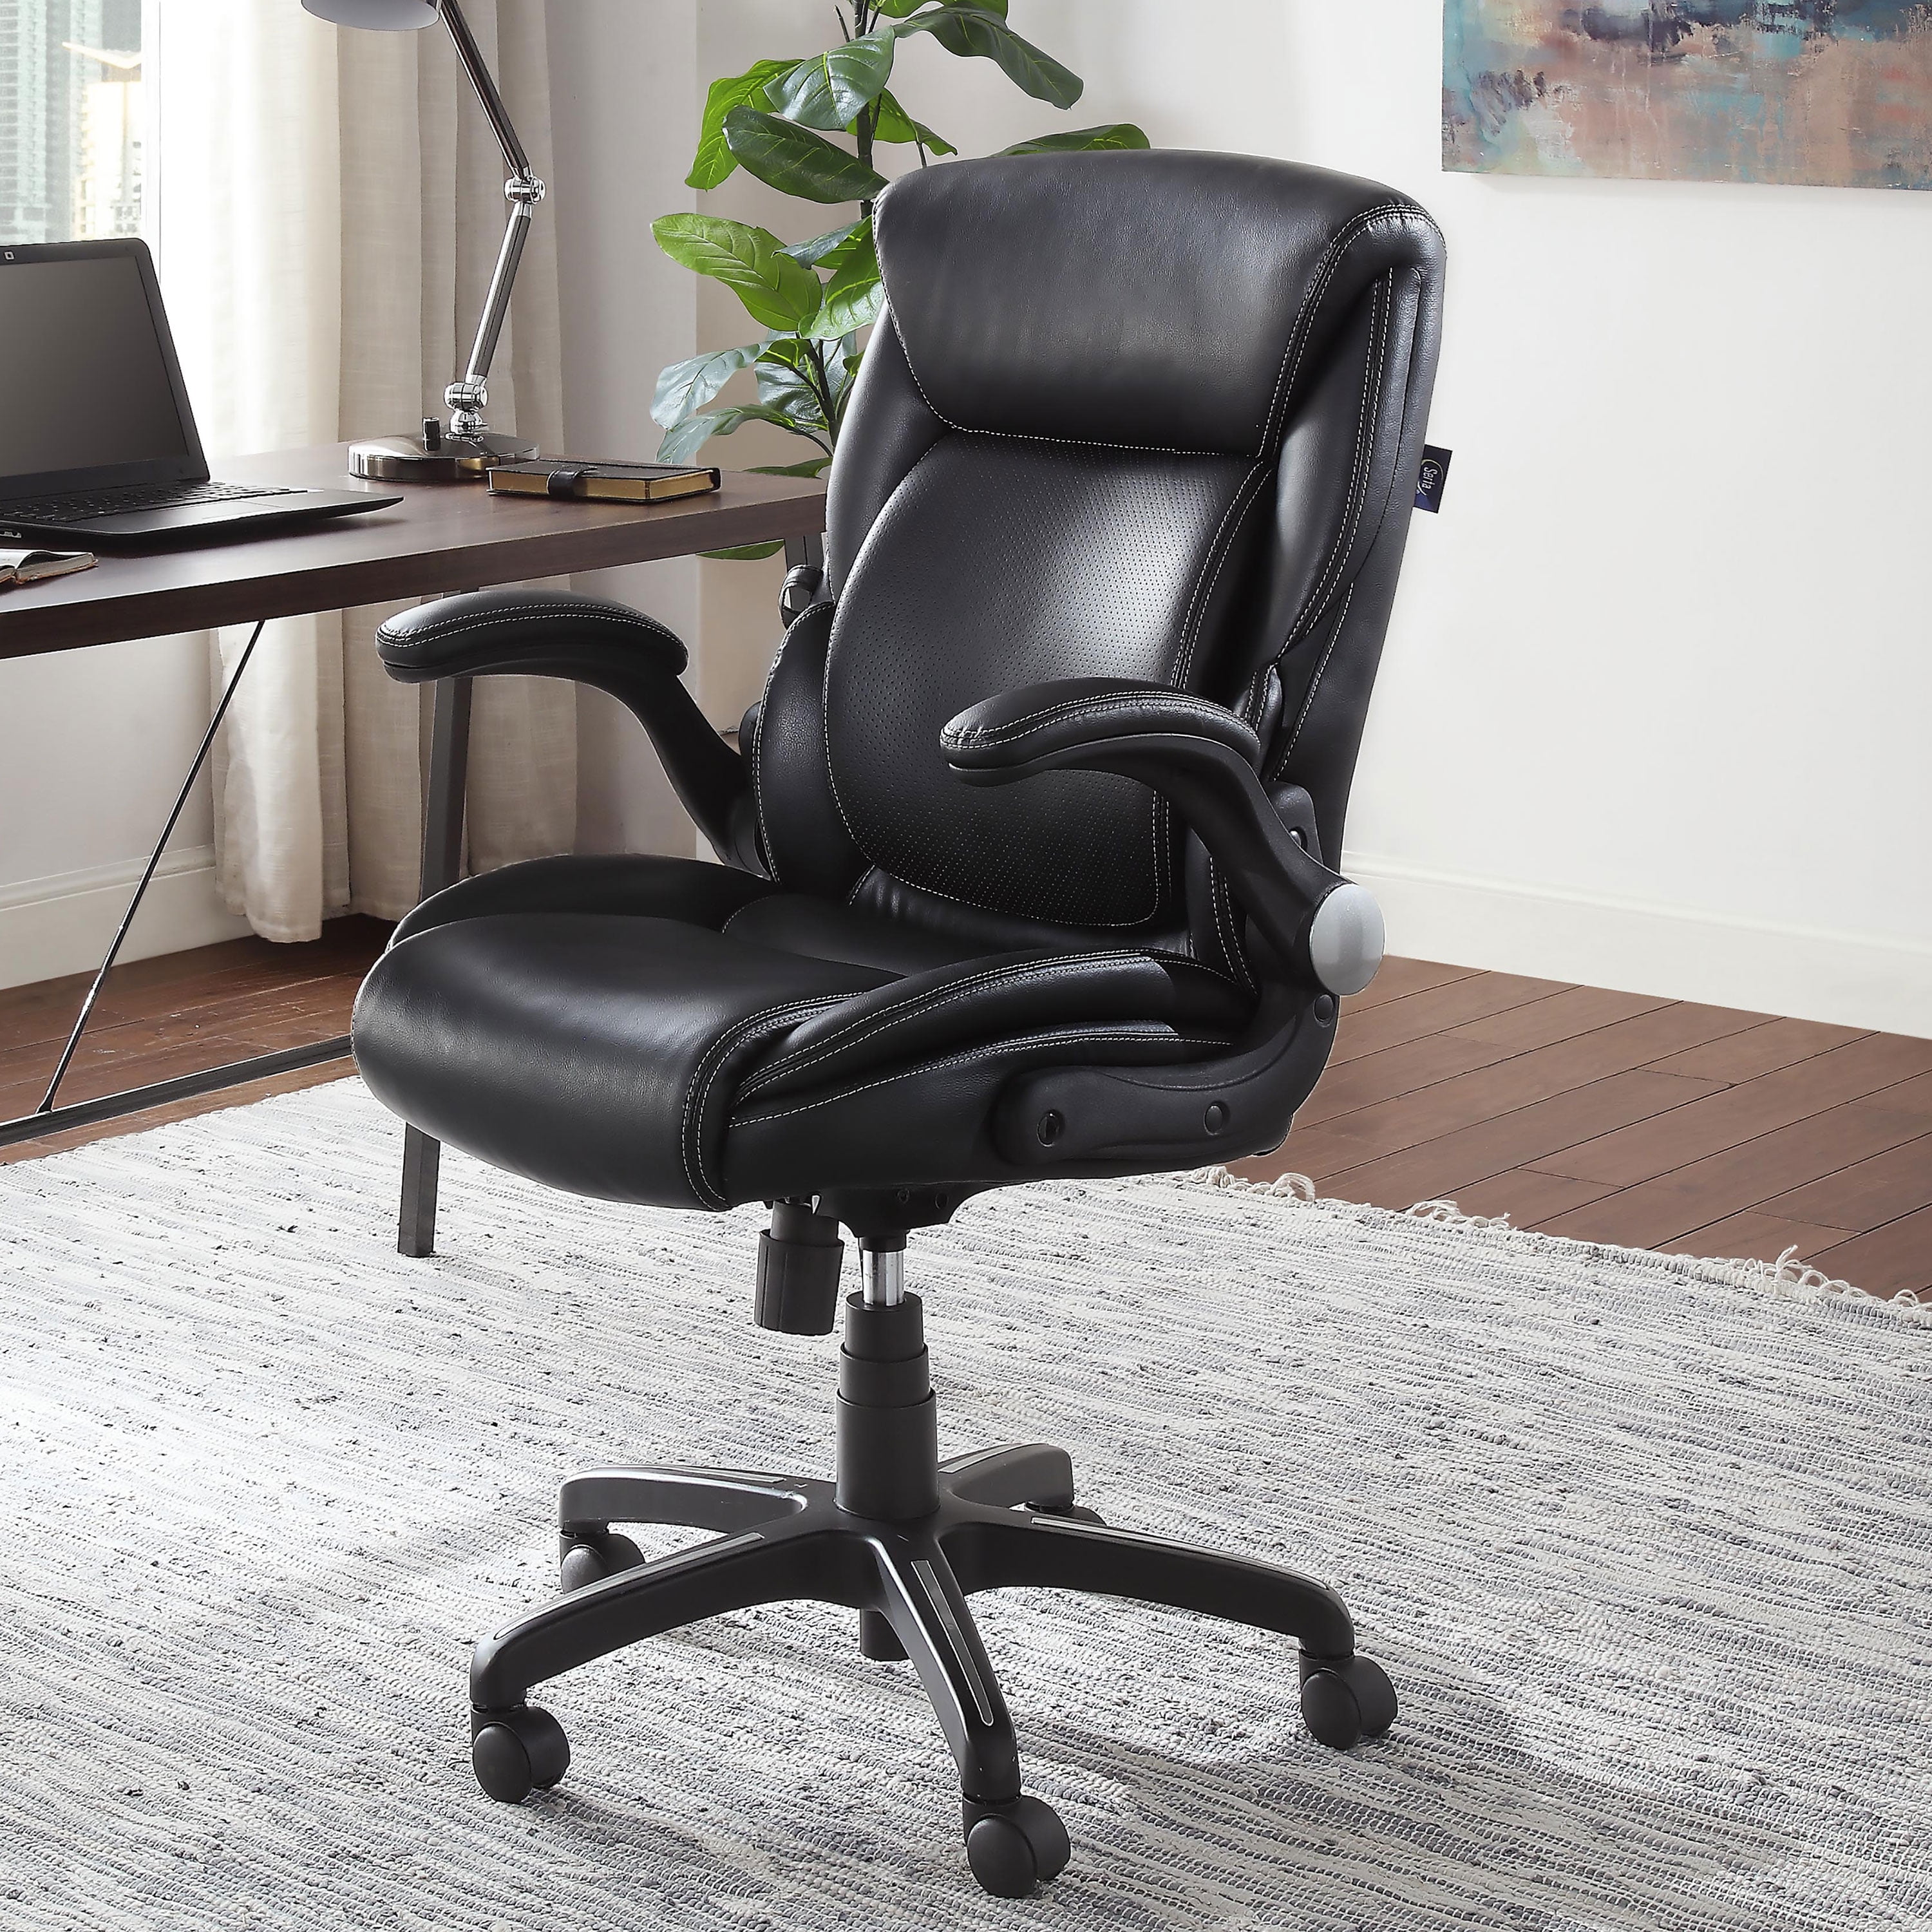 Chair Serta Air Lumbar Bonded Leather Manager Office Chair, Black - Walmart.com